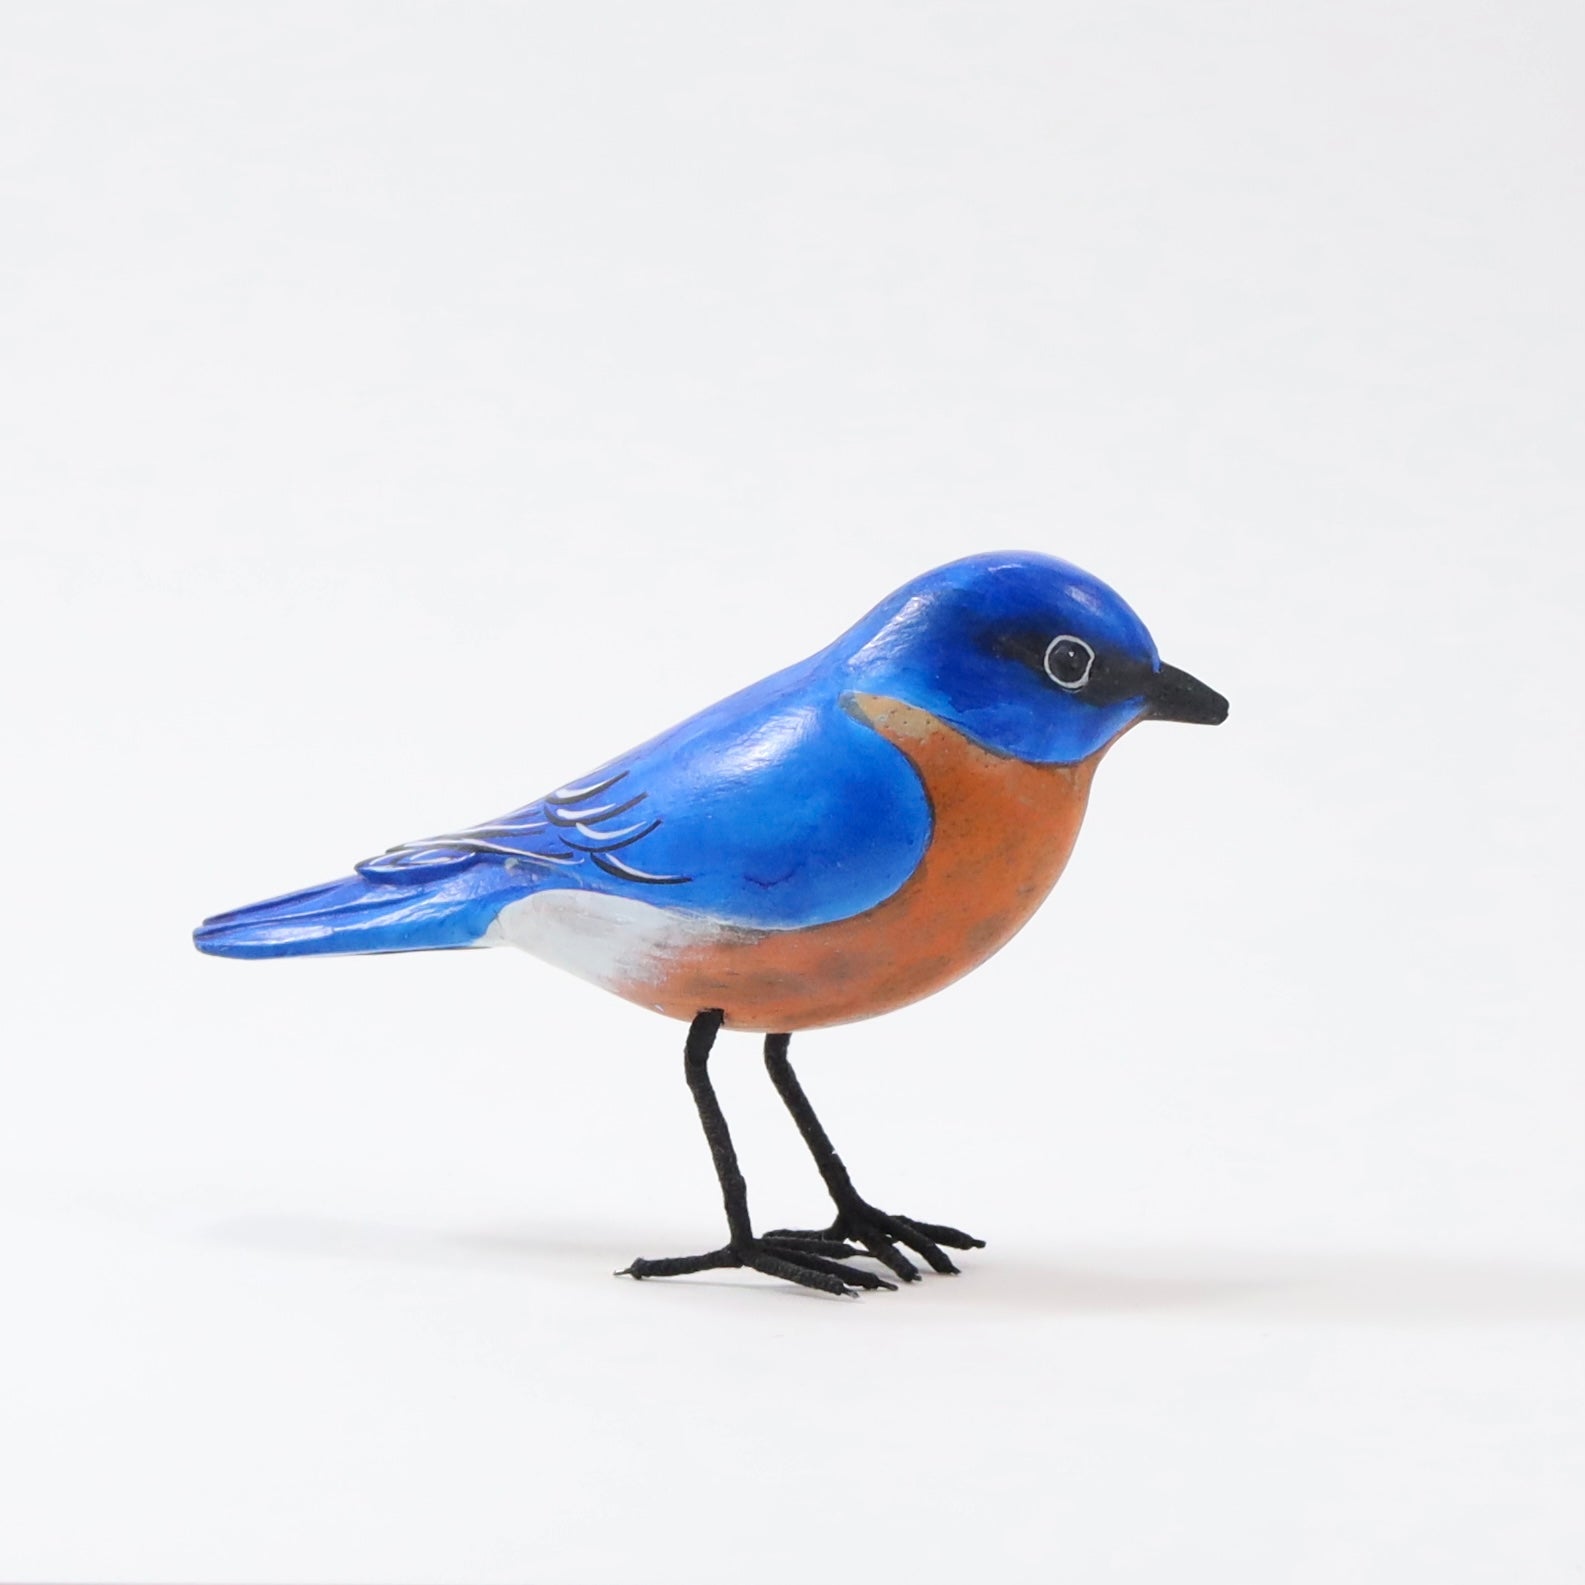 Modeling Paste - Bluebird Arts